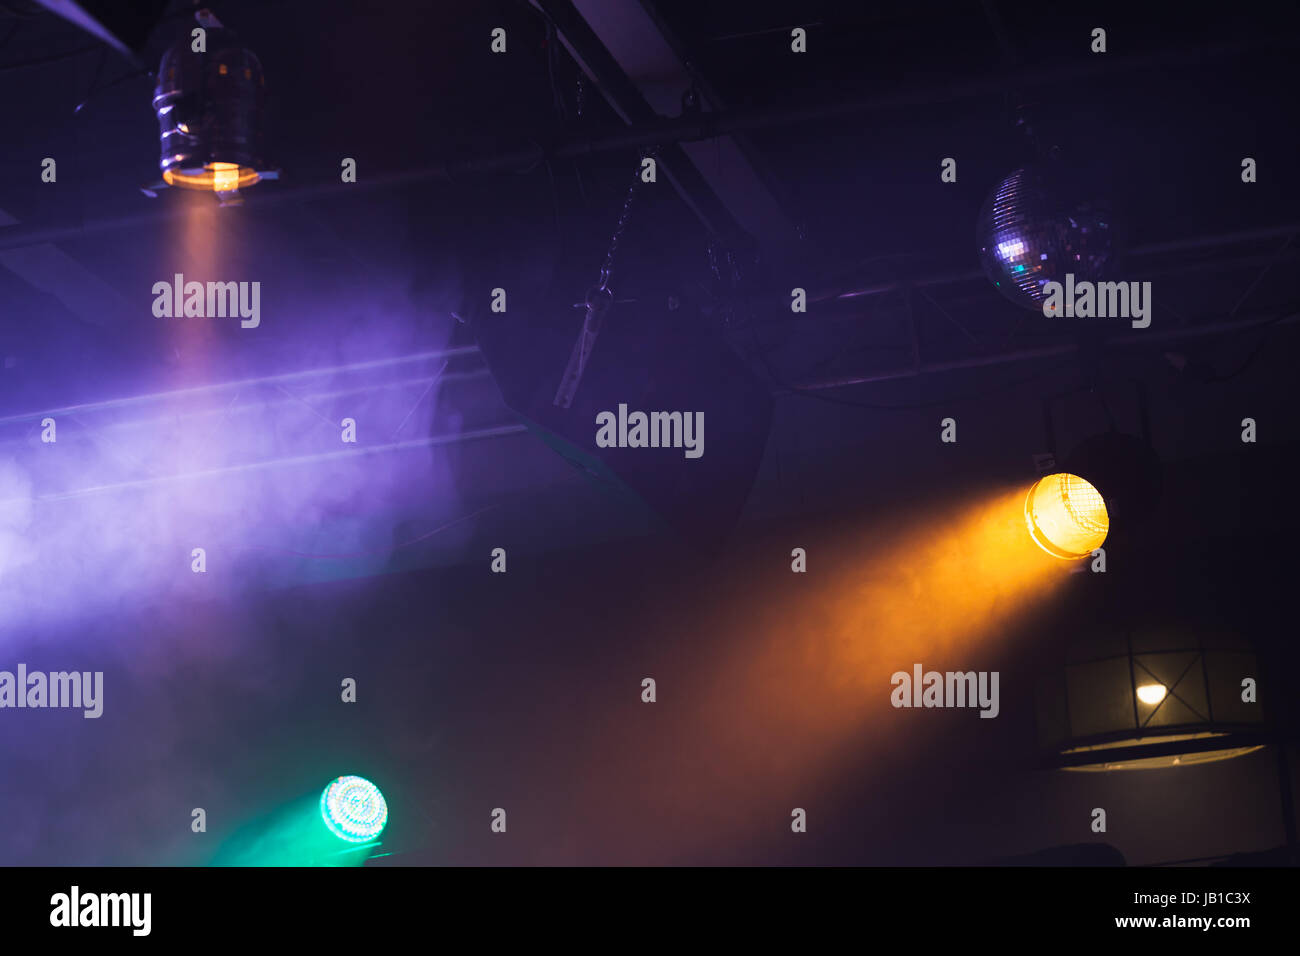 Spot lights over dark background, rock music concert stage illumination equipment Stock Photo